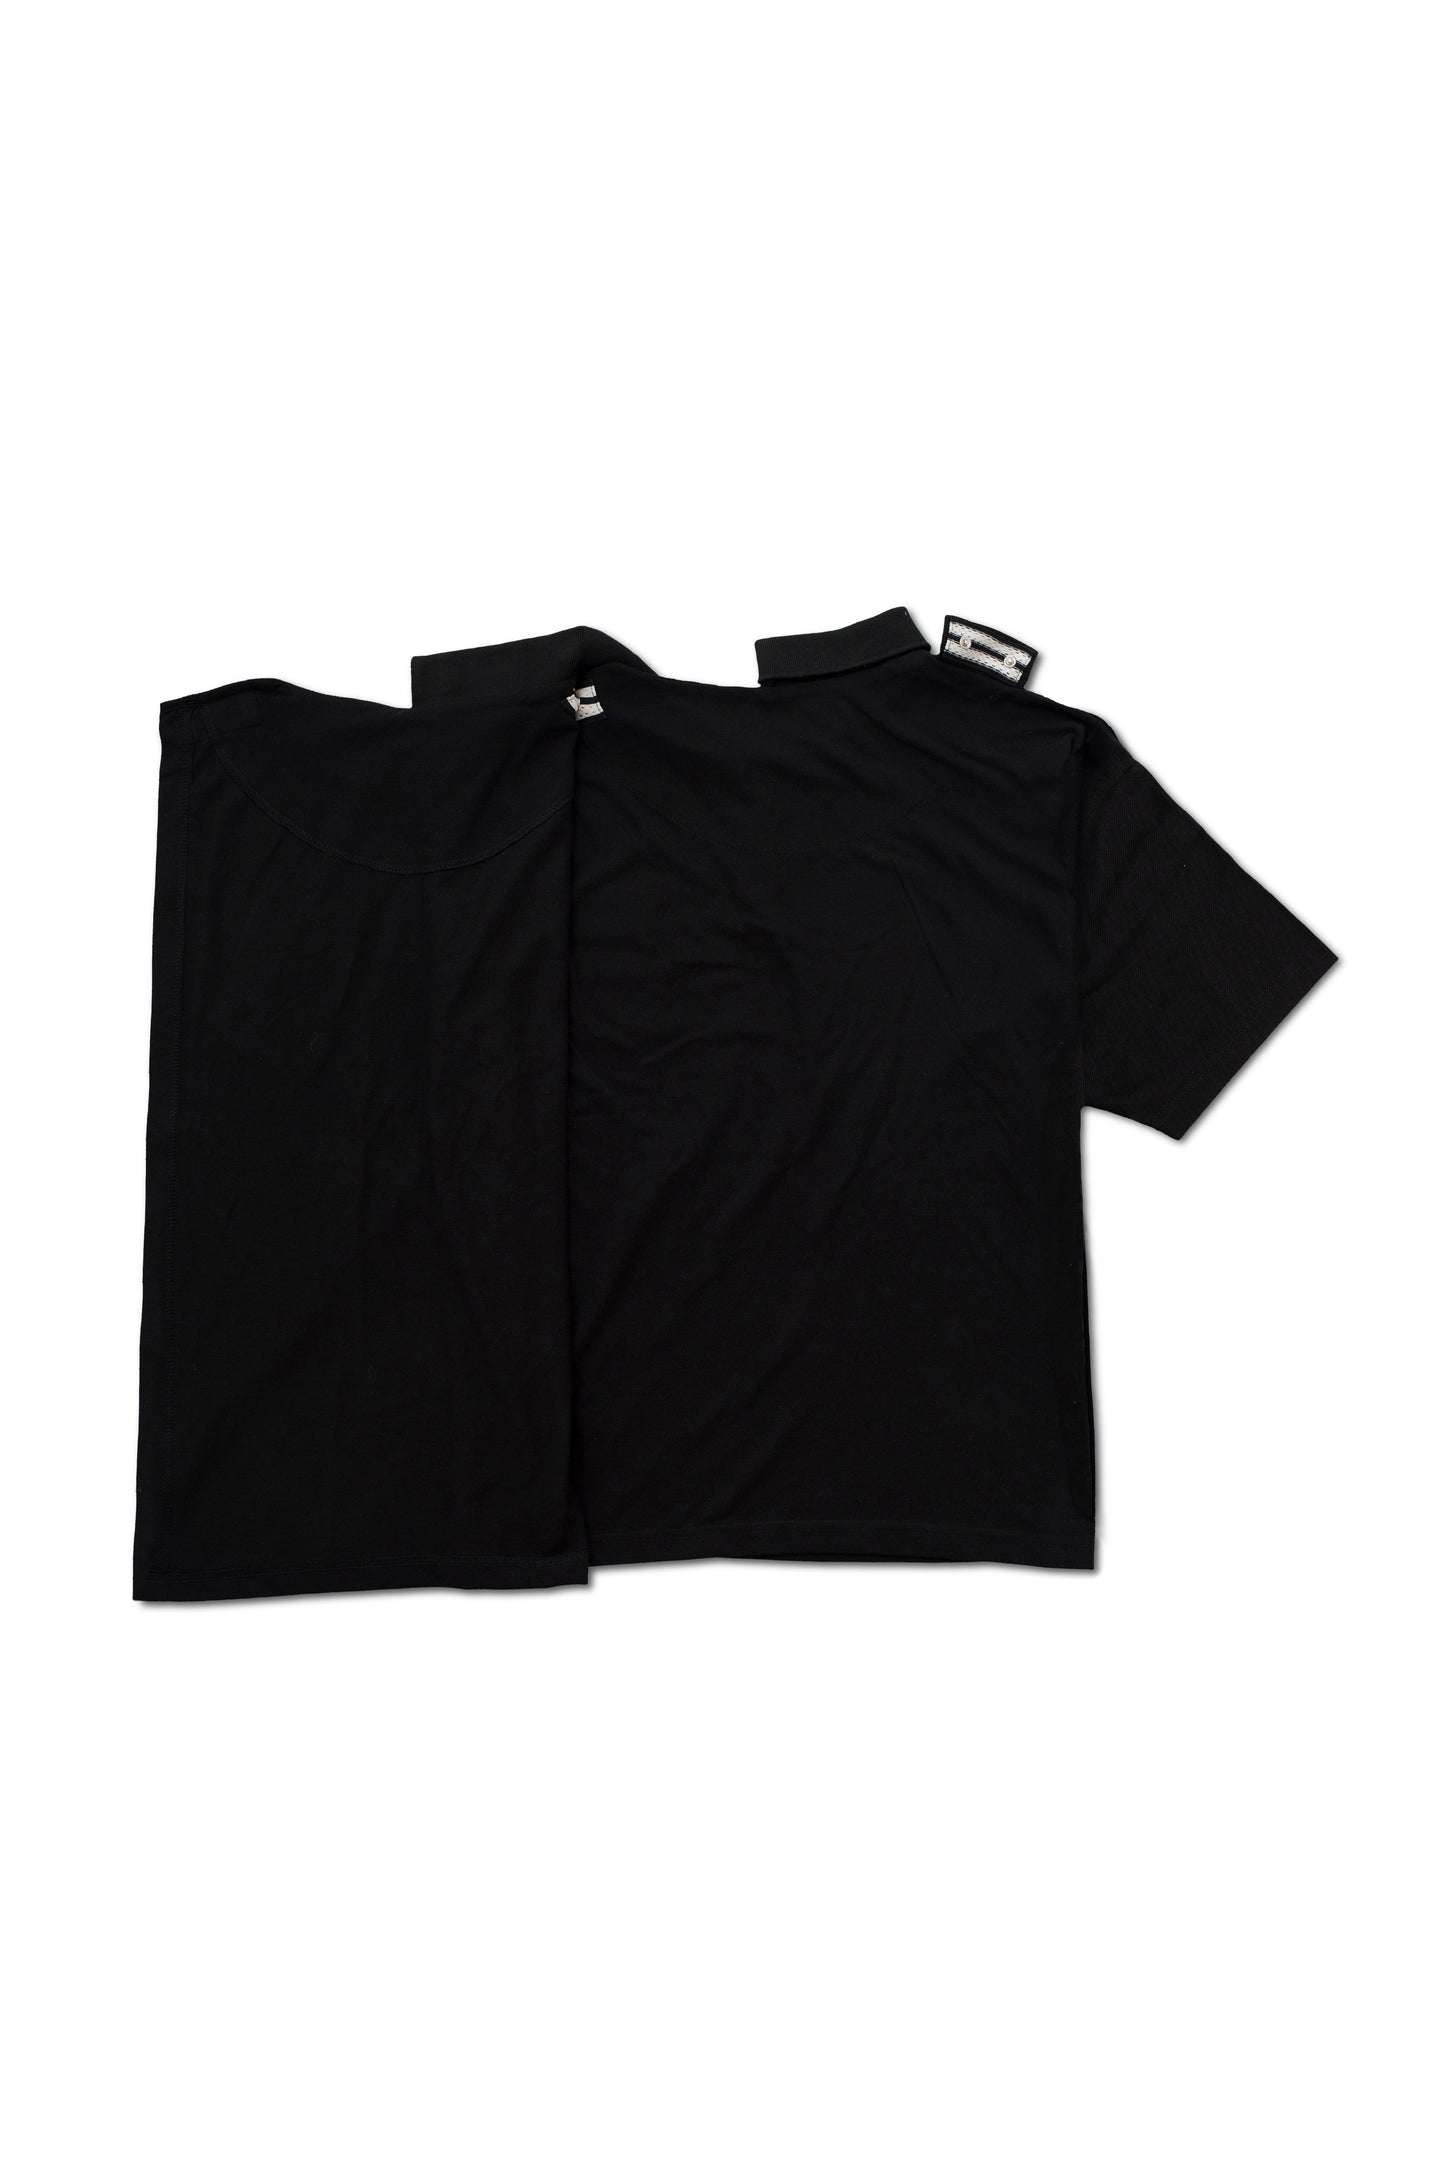 Men's Adaptive Open Back Half Sleeves Black Polo T-shirt